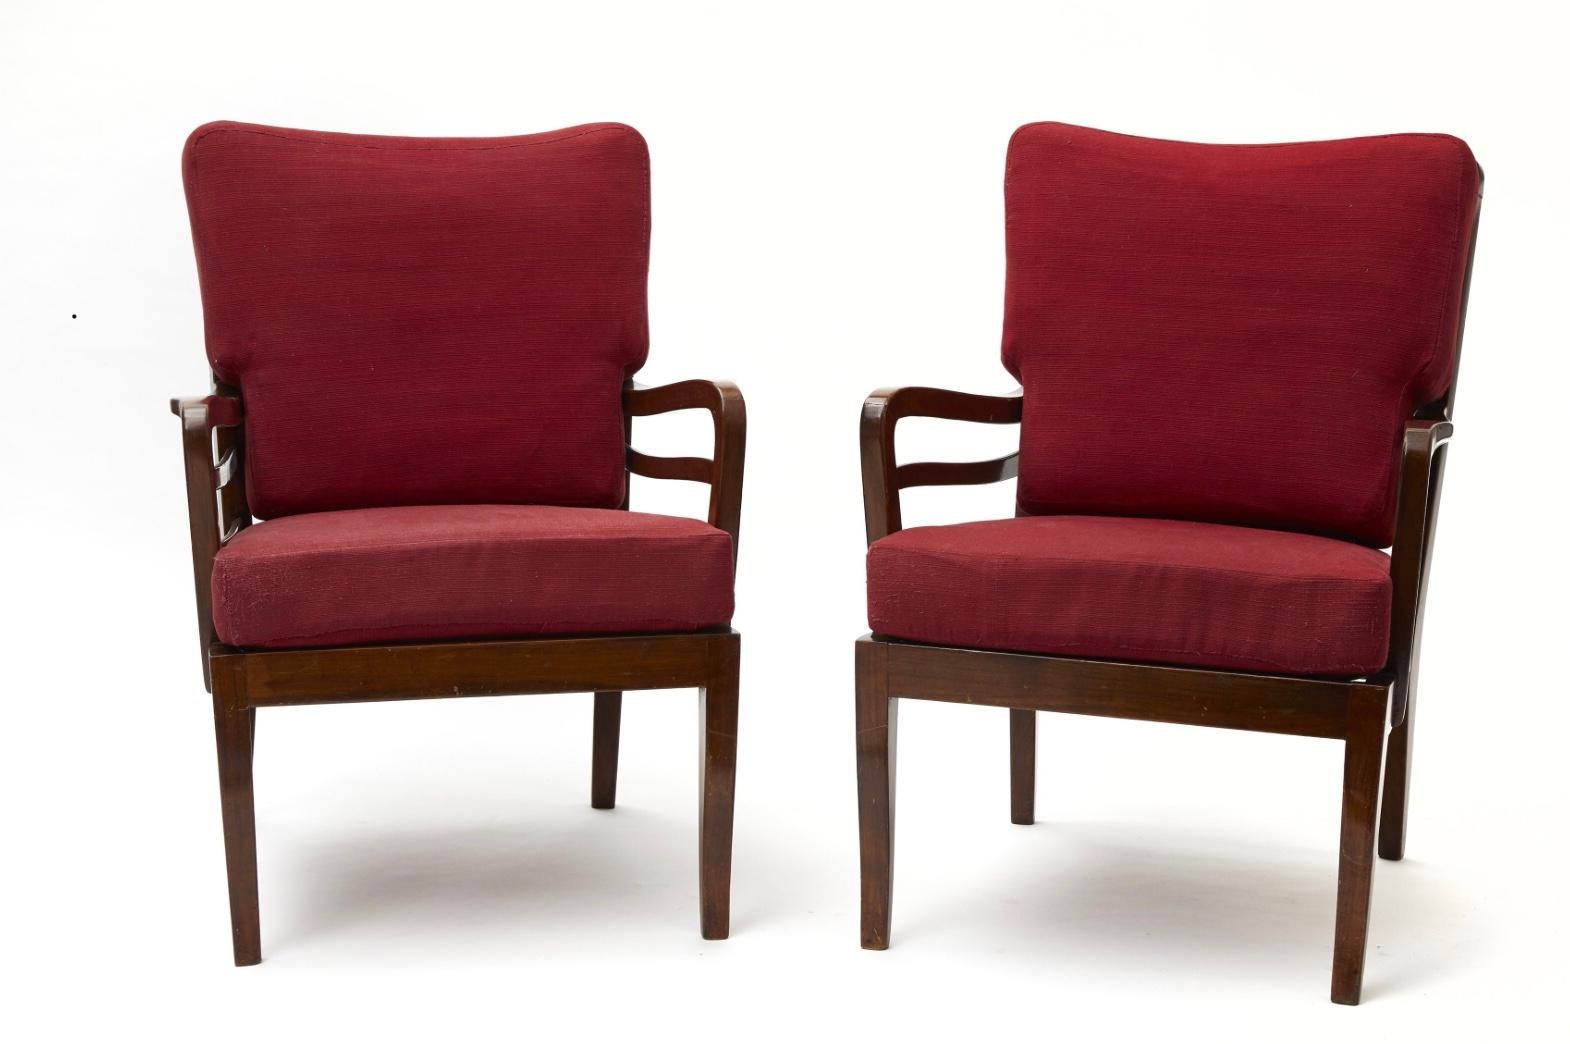 Cavatorta pair of armchairs wood padded fabric, 1950, Italy.